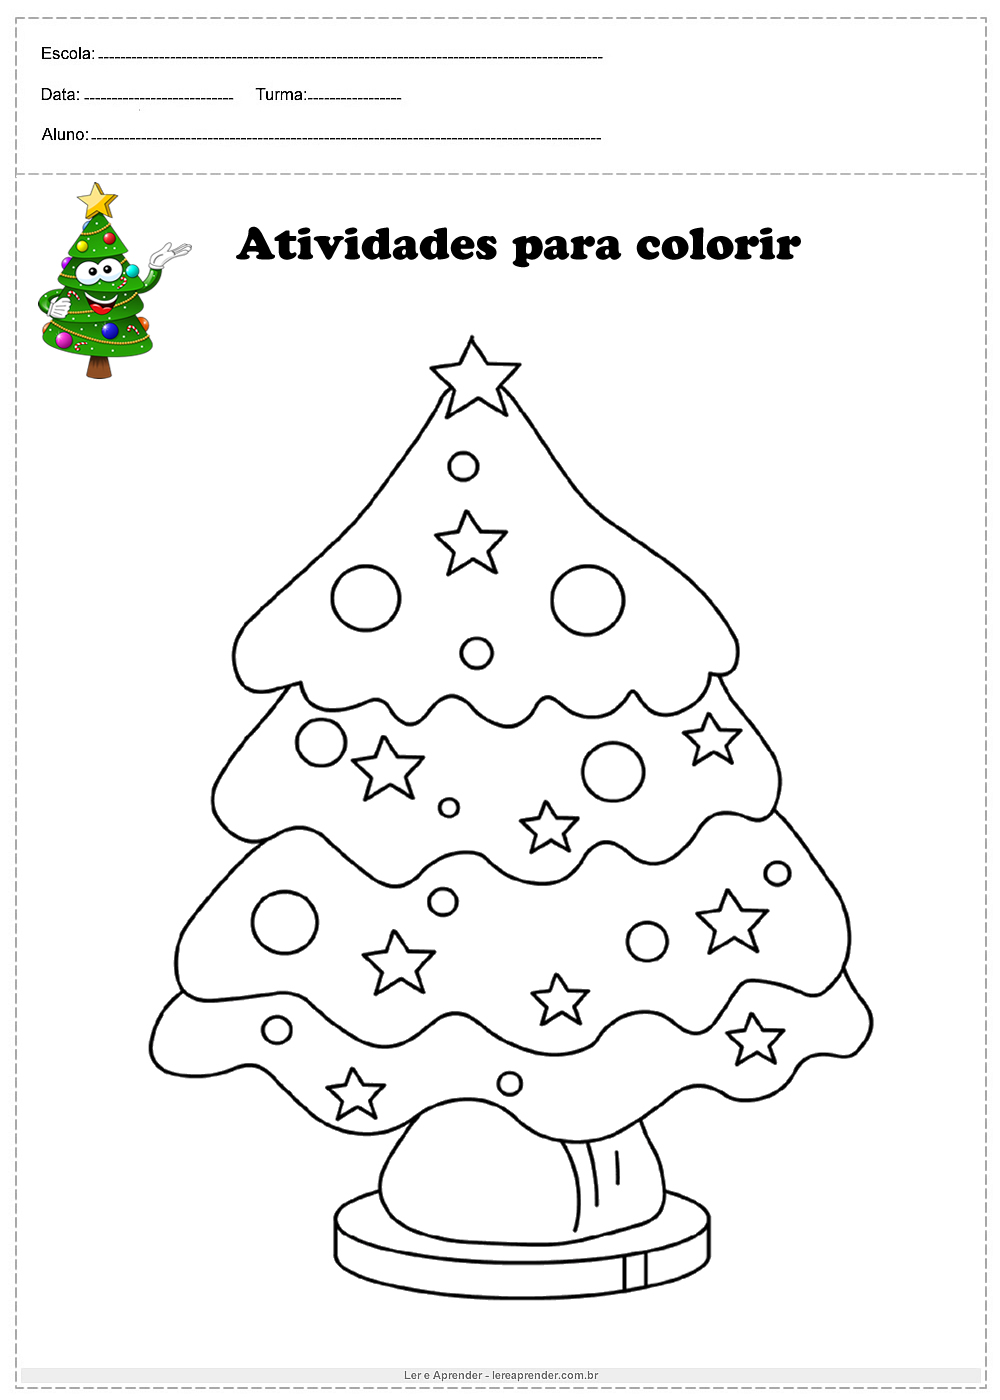 Pinte a árvore de natal bem bonita - Ler e Aprender